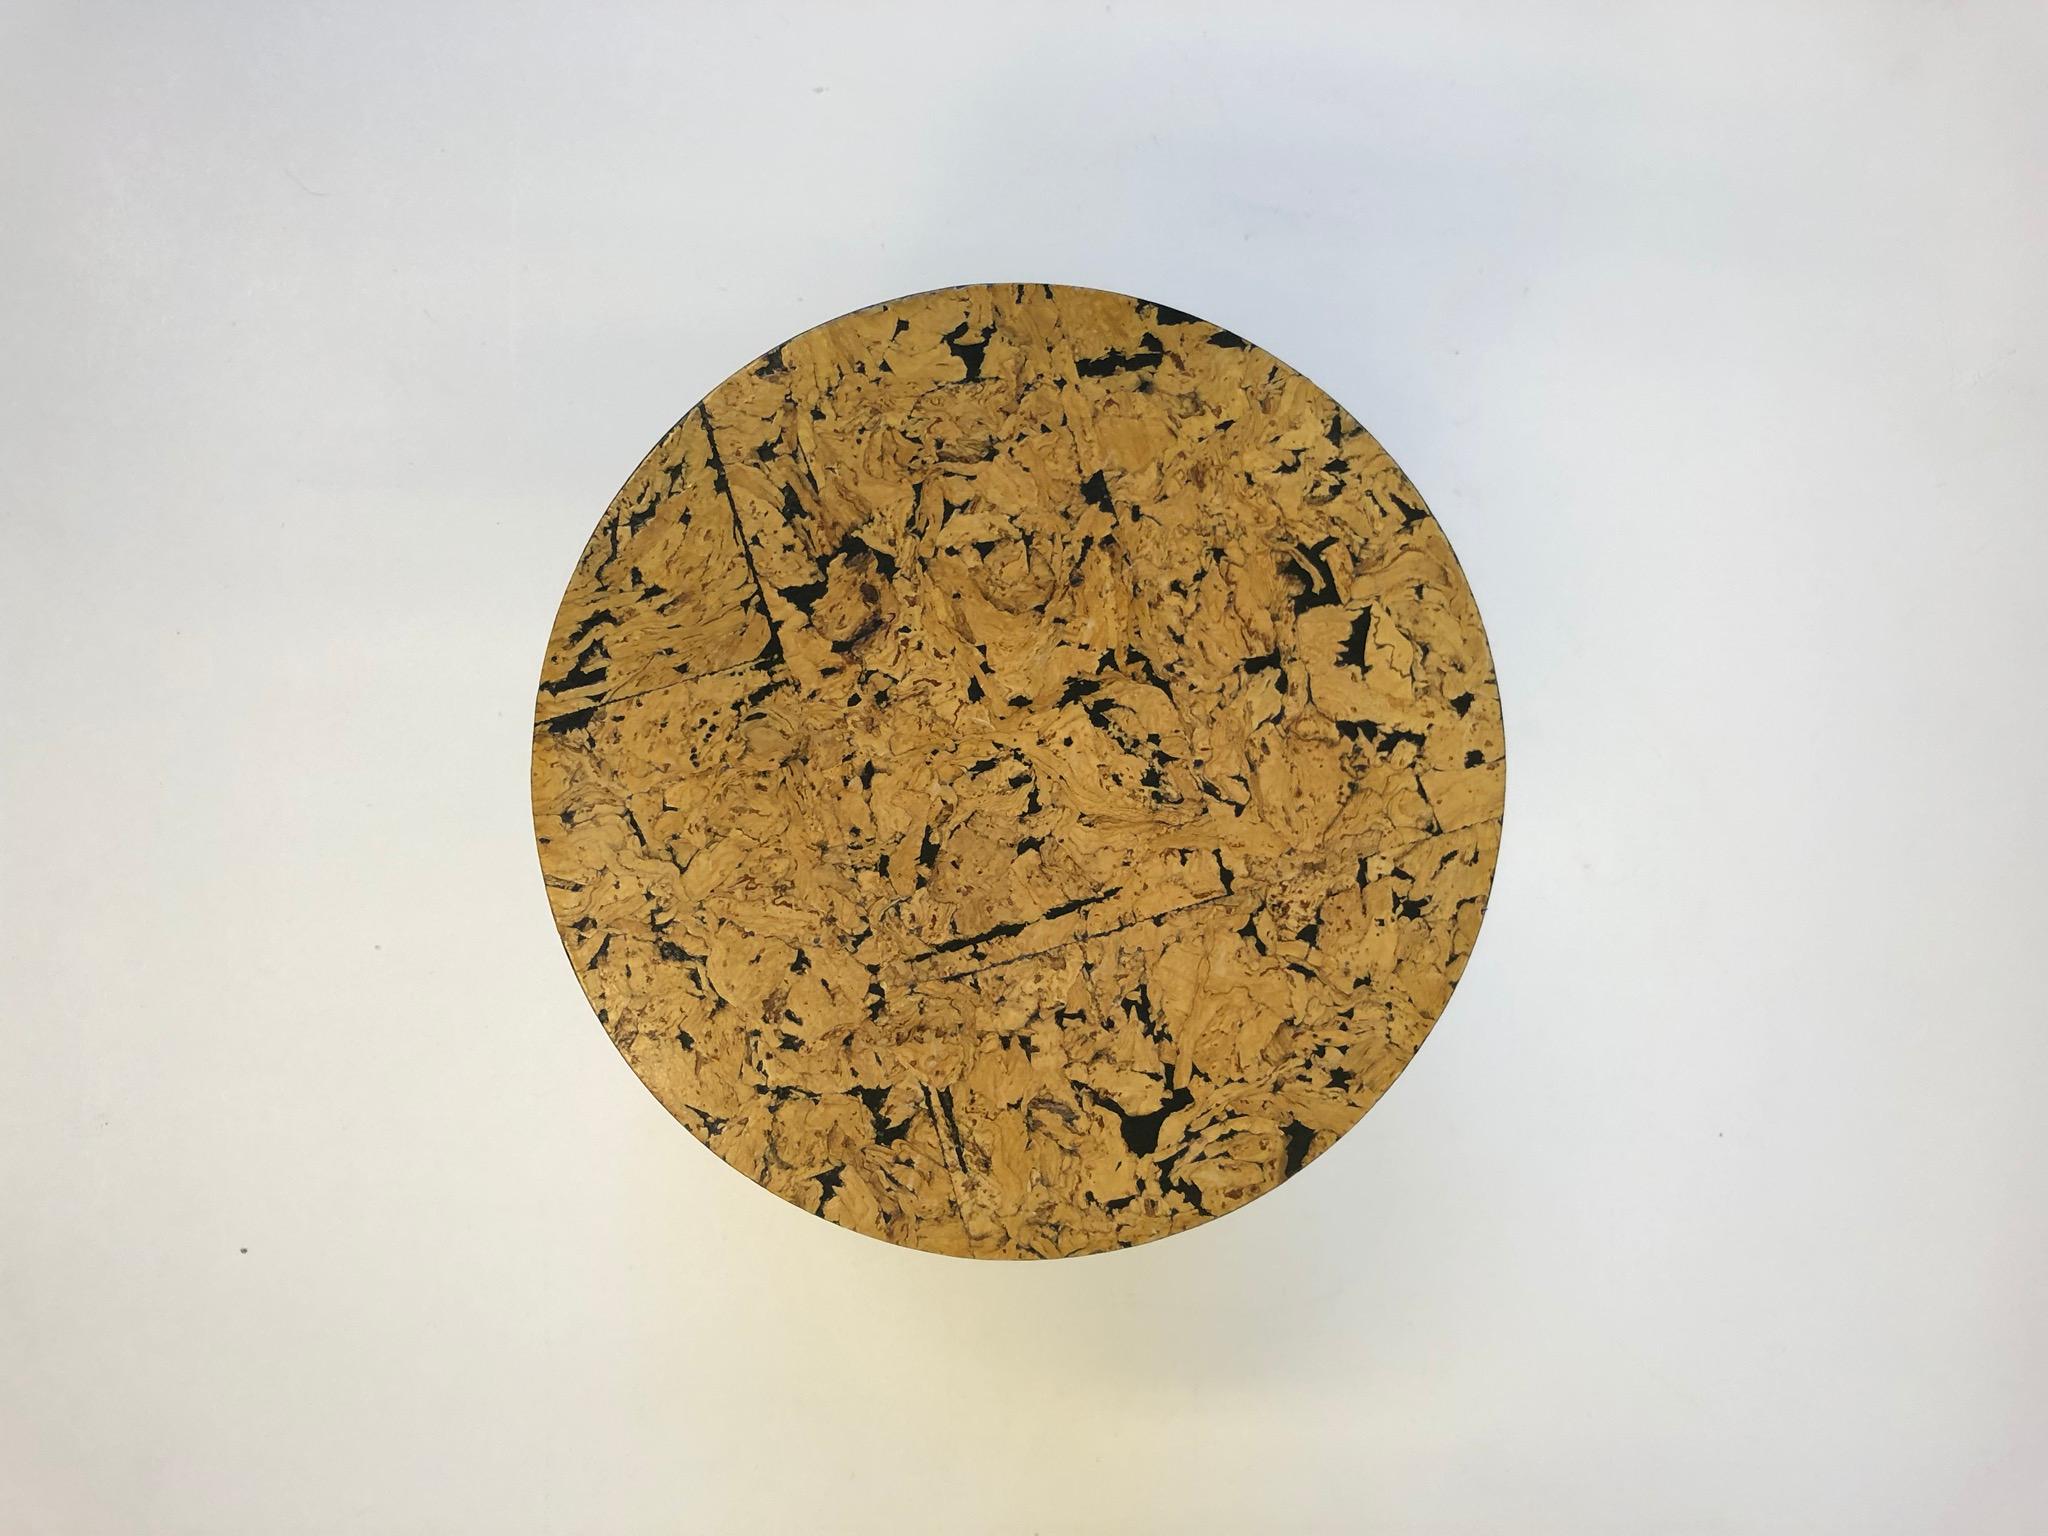 A cool 1970s cork veneer occasional drum table marked ML on brass veneer label.
Dimensions: 11” diameter 16” high.